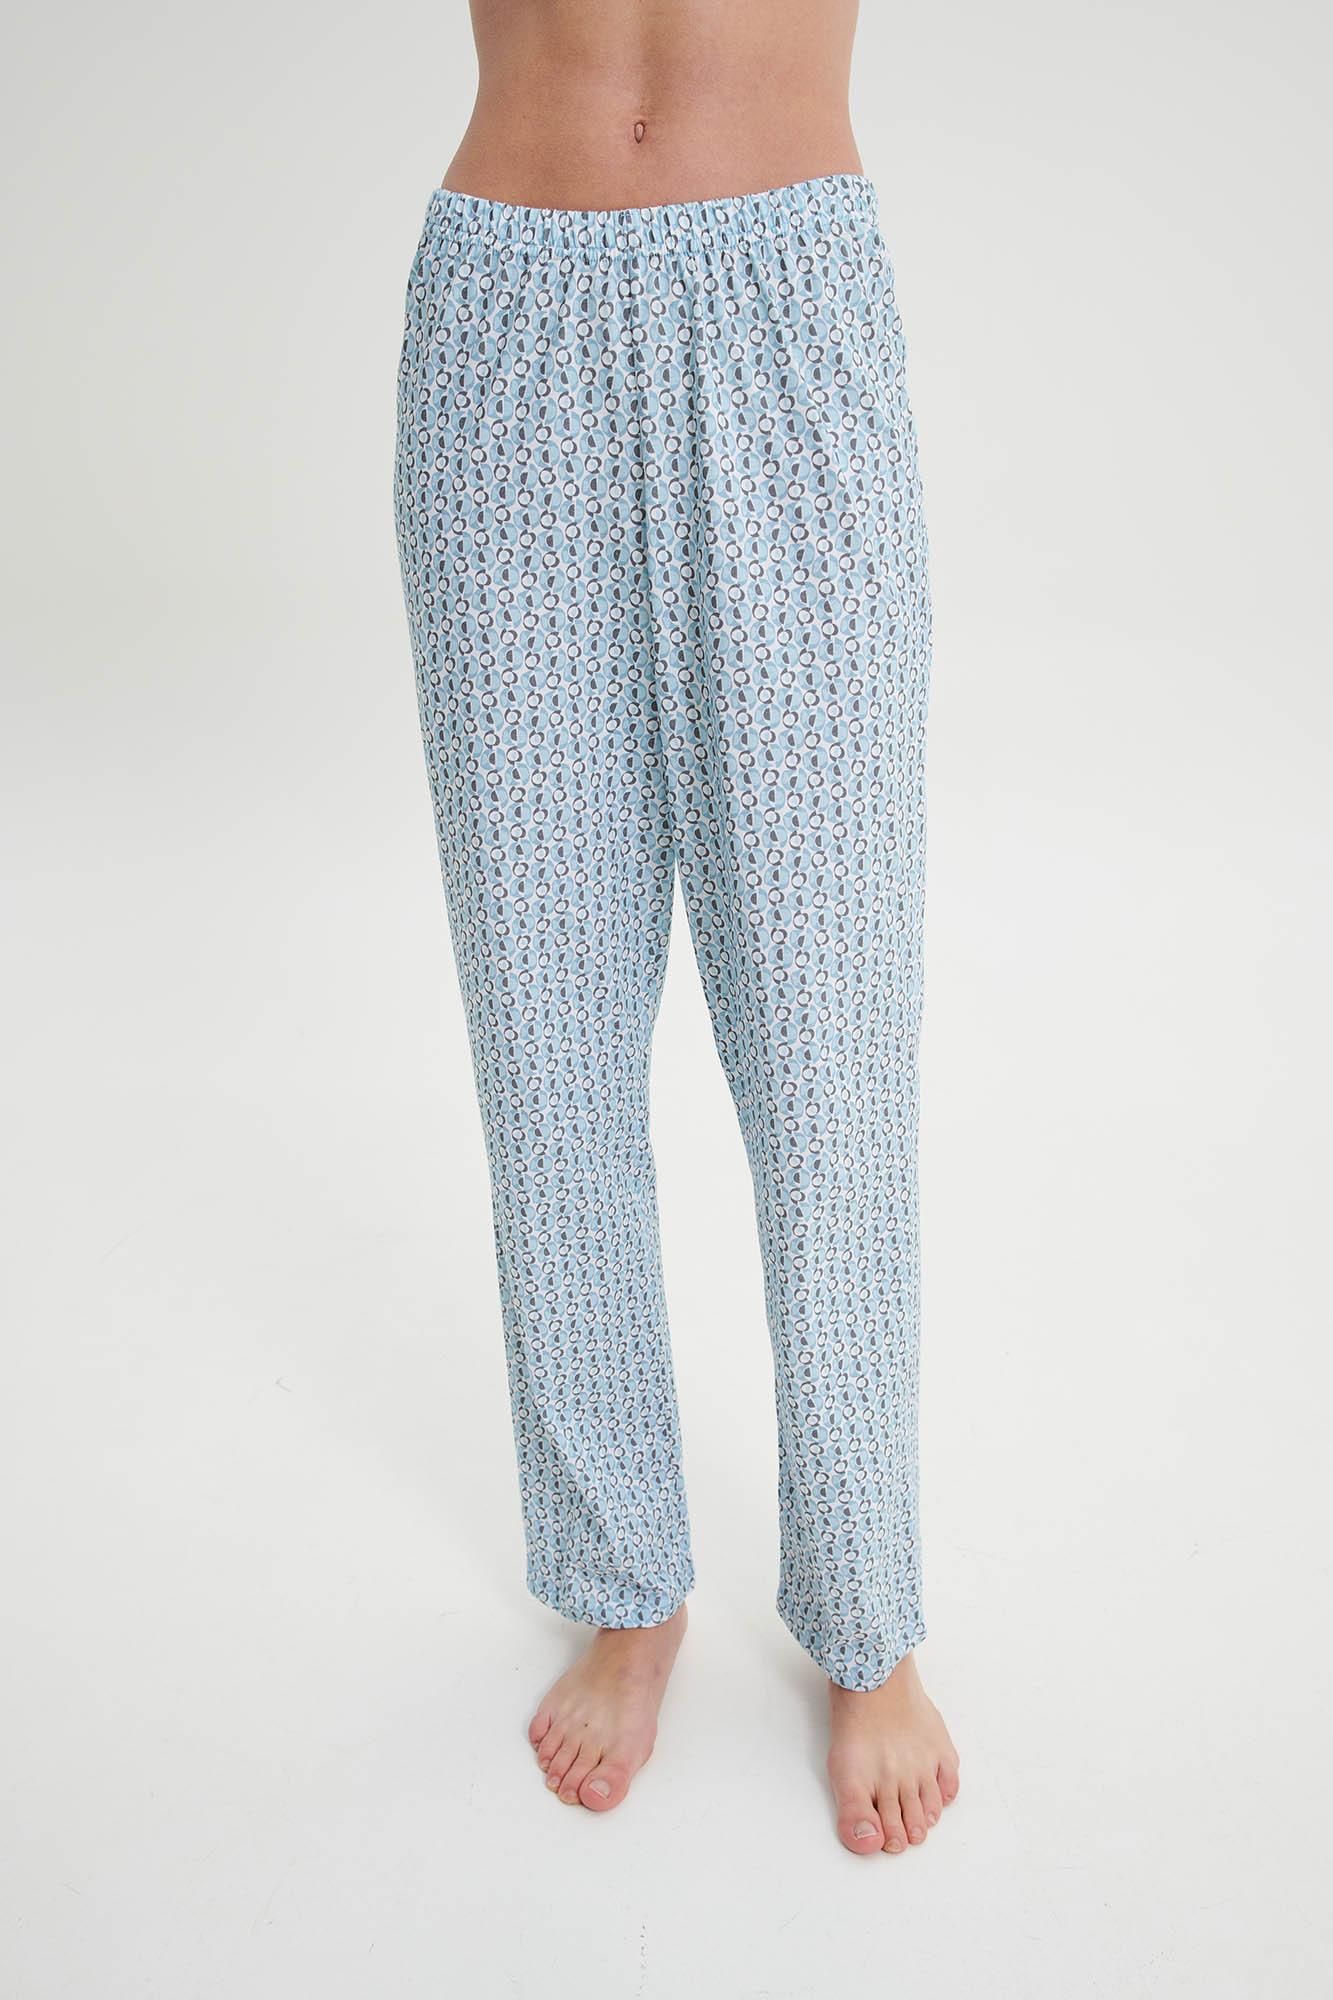 Pyjamas with Button Placket